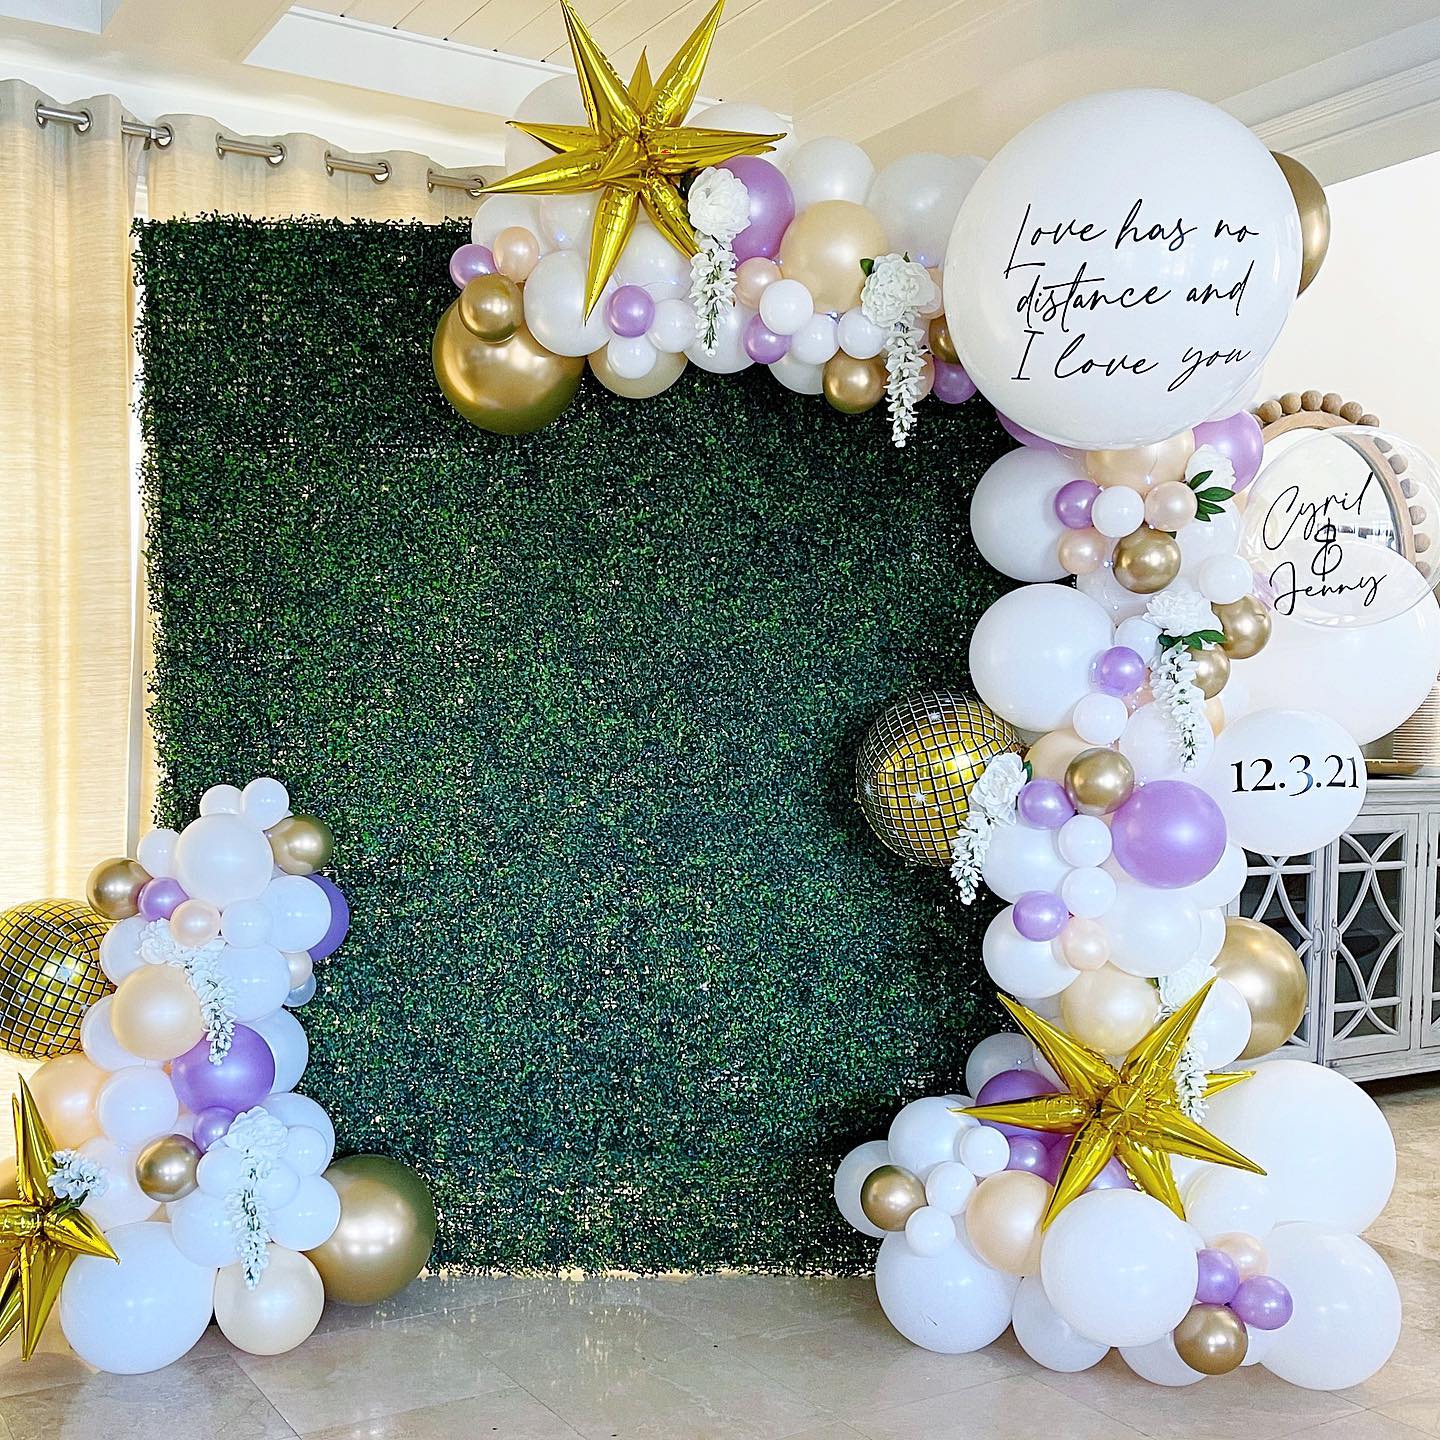 “Love has no distance” 

#weddingreception #backdrop #balloongarland #organicballoons #balloondecor #weddingballoons #ballooninstallation #weddingday #photobooth #discoparty #wedding #hedgewall #proprental #destinballoons #destin